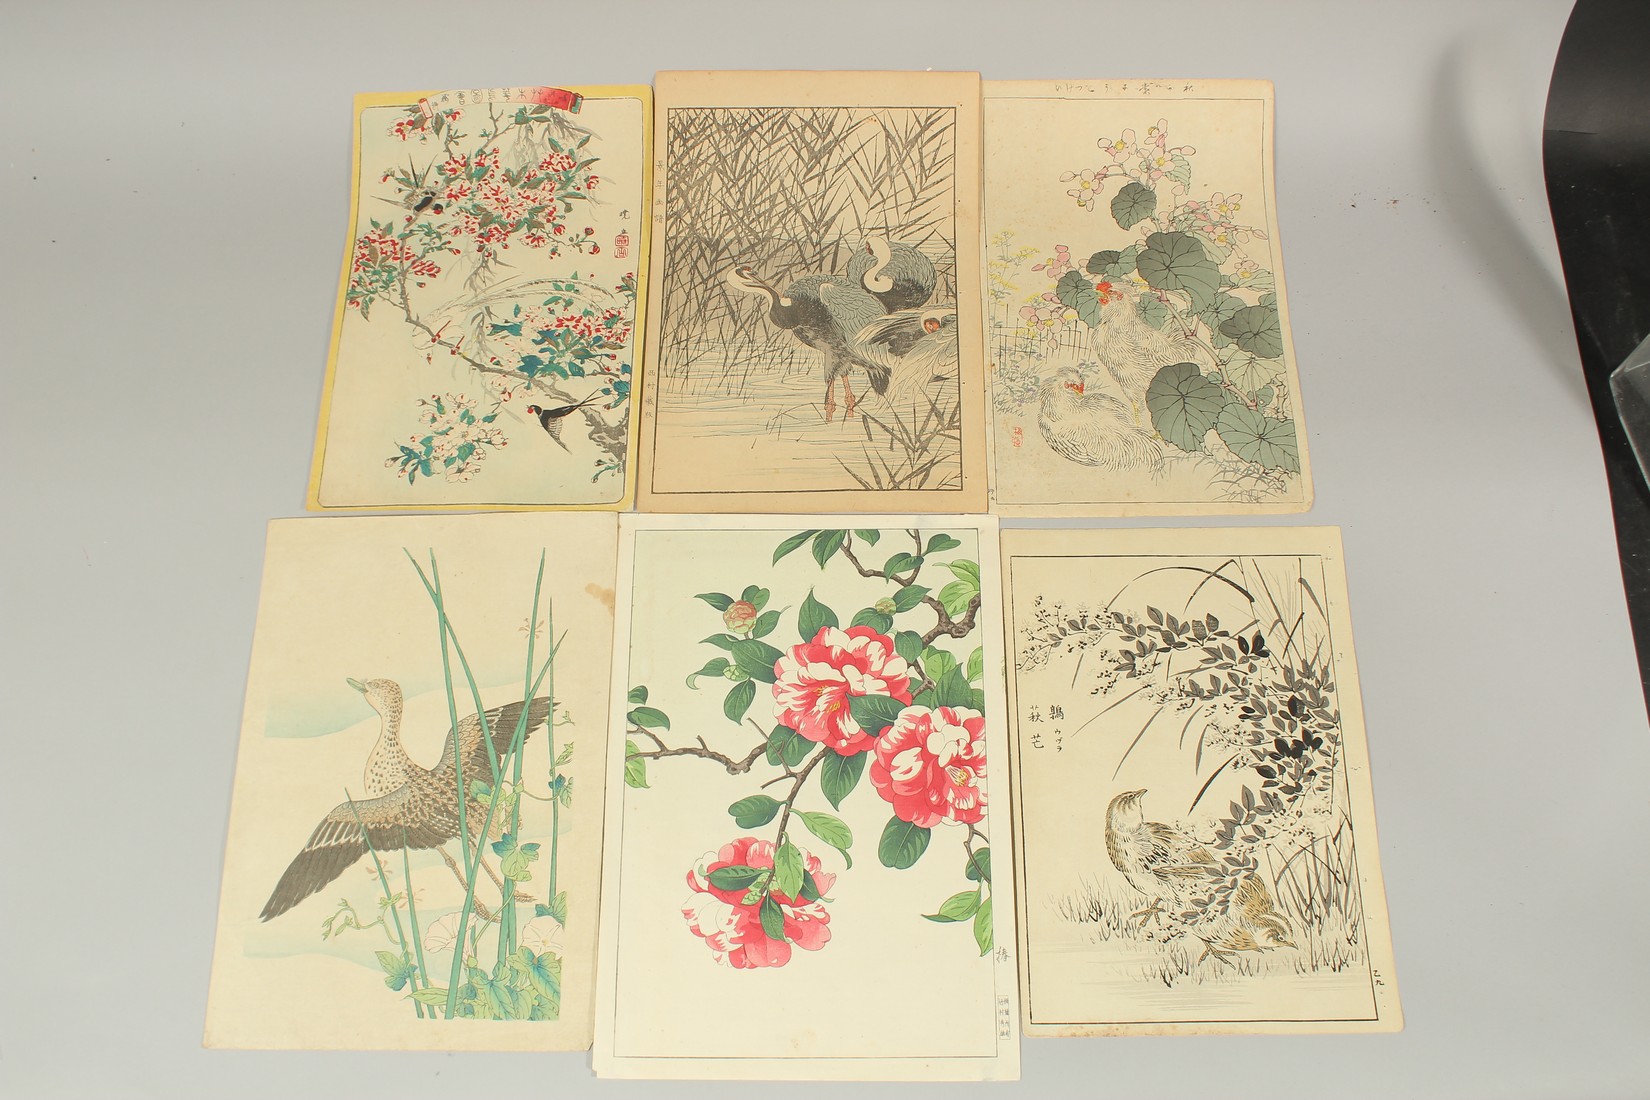 SHODO KAWARAZAKI (1889-1973), BAIREI KONO (1844-1895) & OTHERS: BIRDS AND FLOWERS, seven late 19th